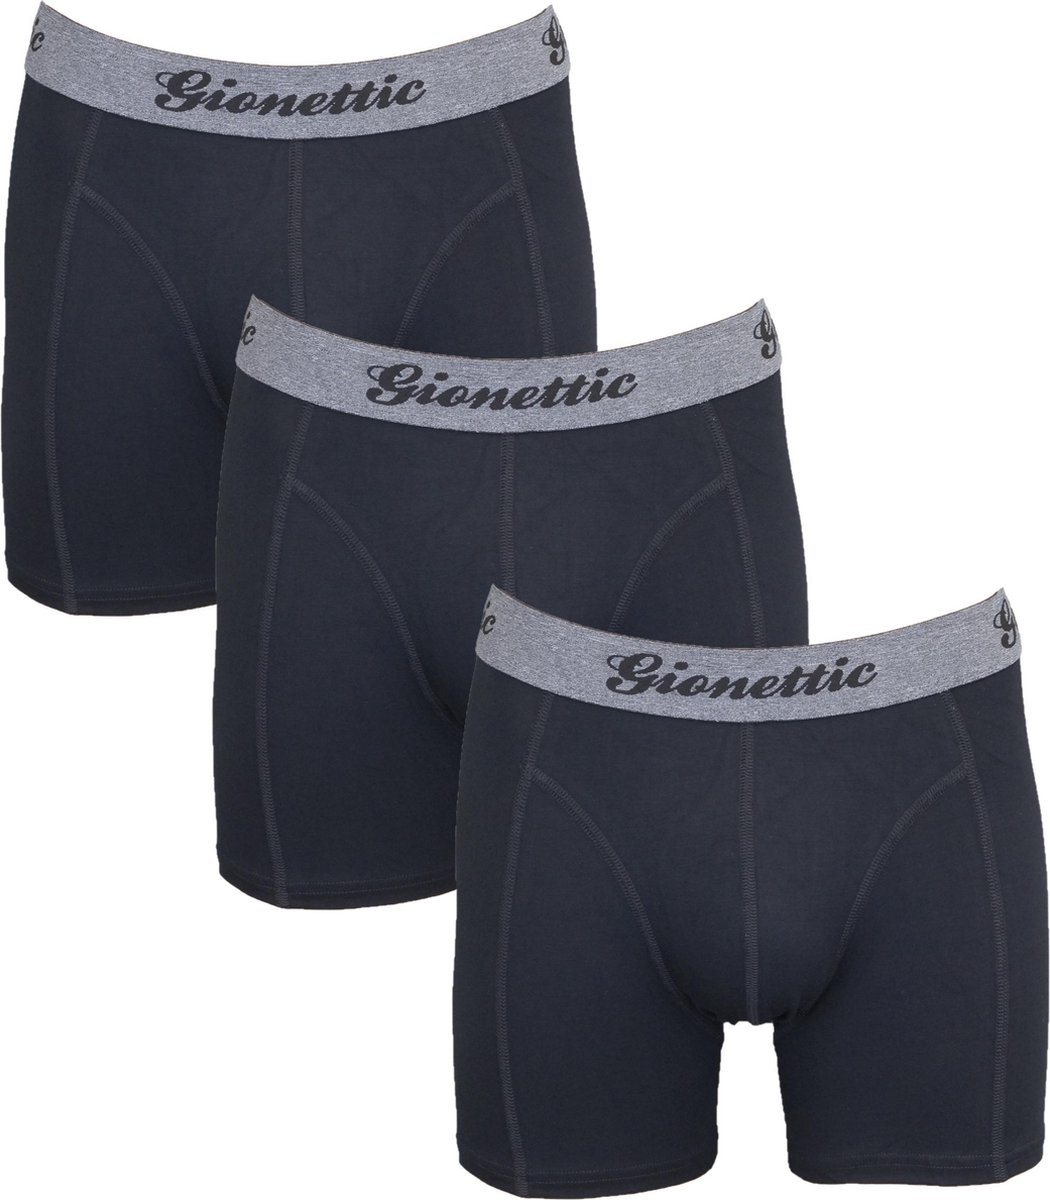 3-Pack Gionettic Modal Heren boxershorts Zwart maat L